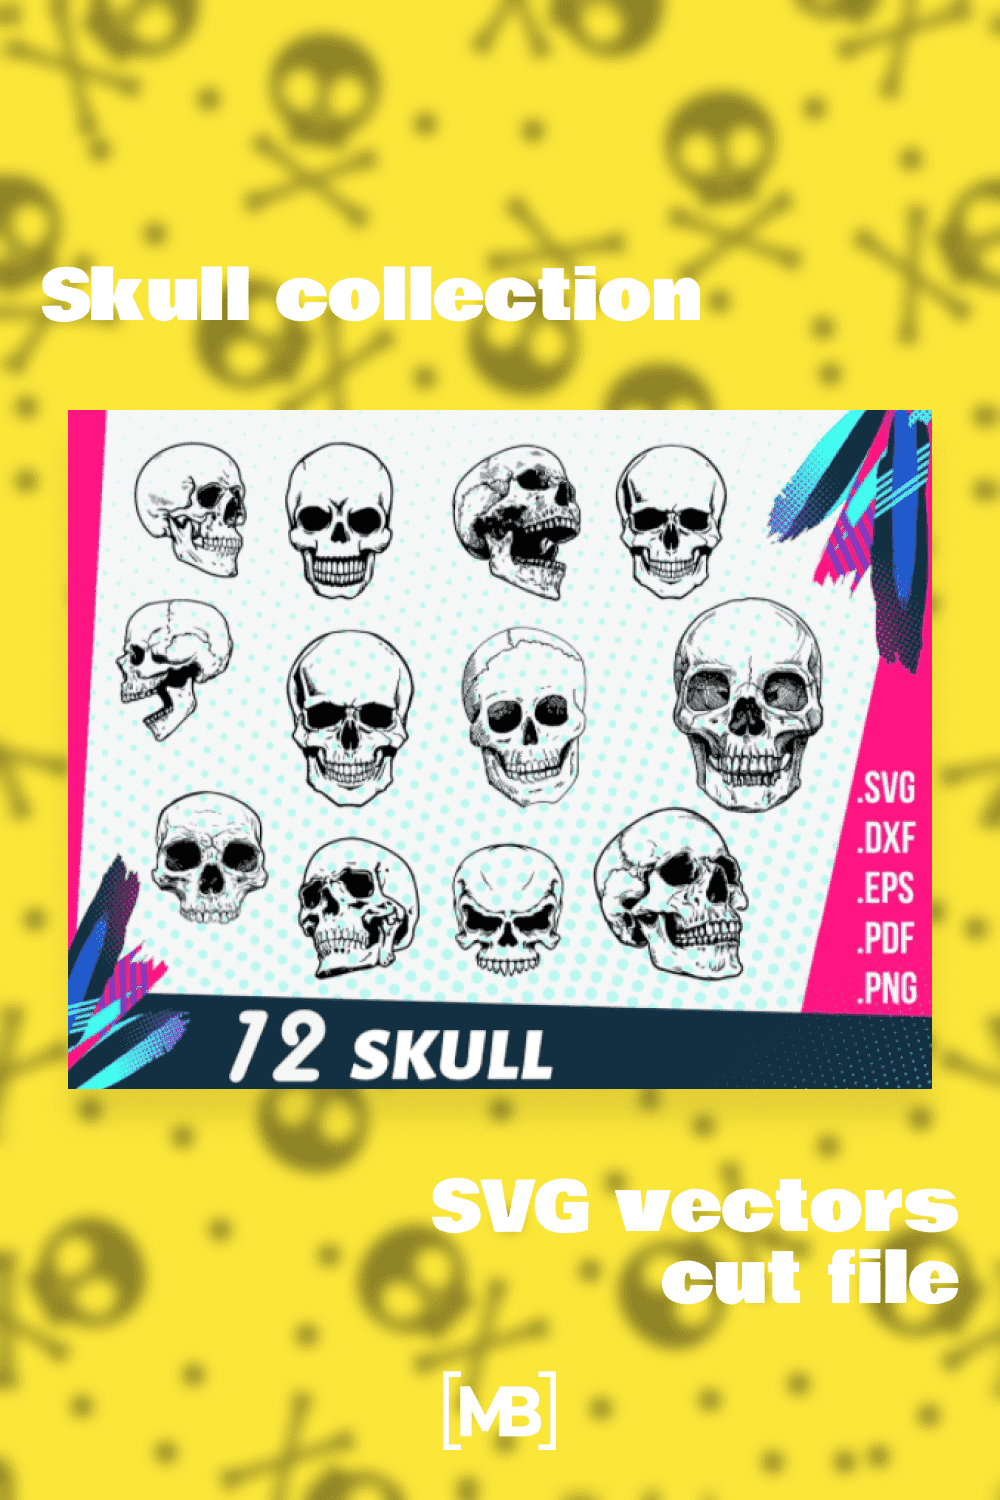 Skull collection svg vectors cut file.